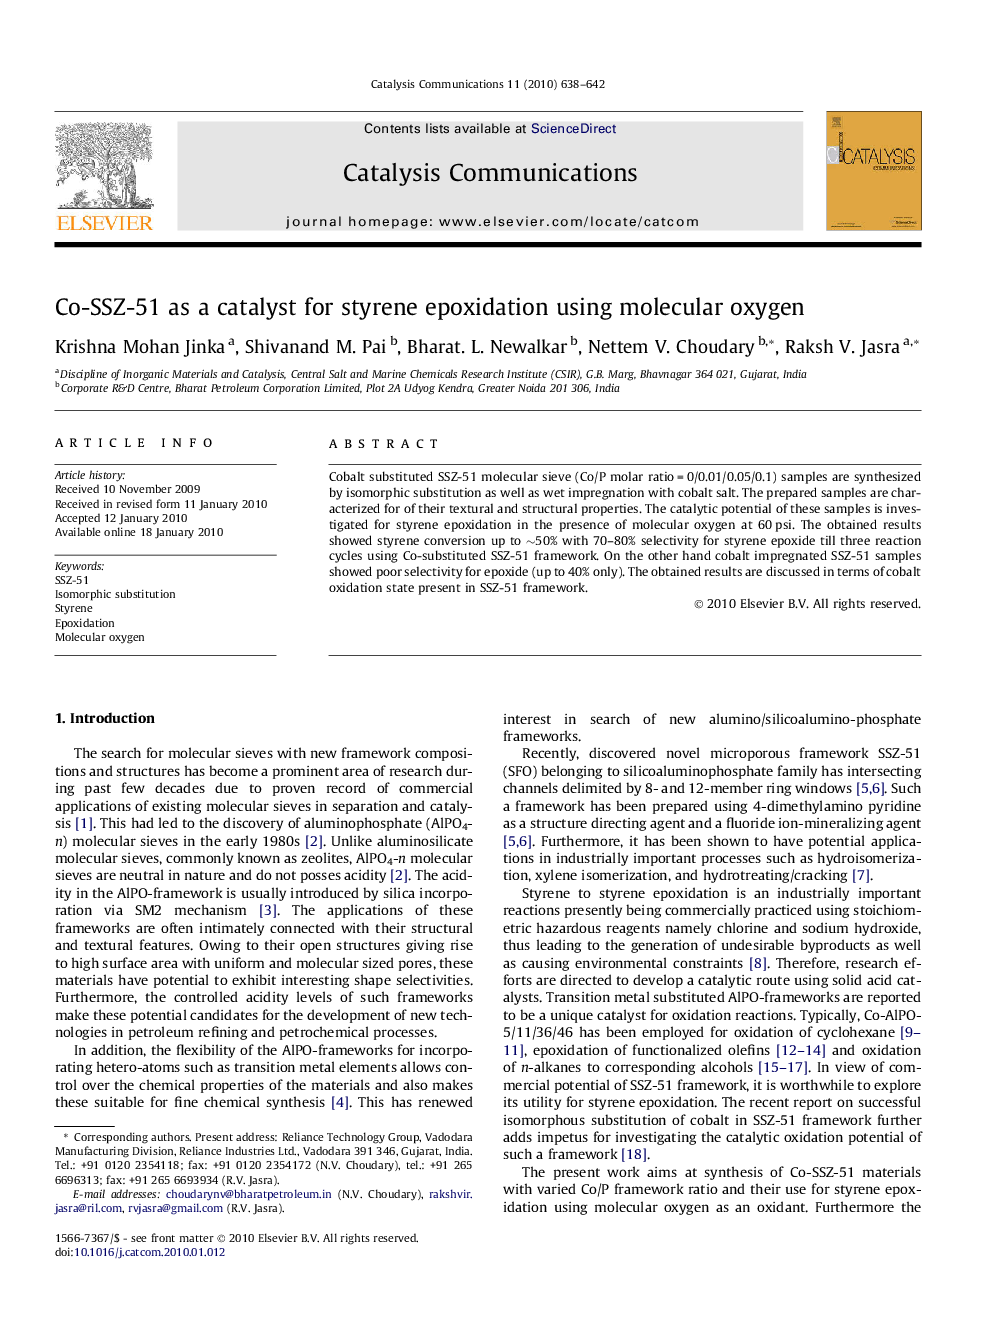 Co-SSZ-51 as a catalyst for styrene epoxidation using molecular oxygen